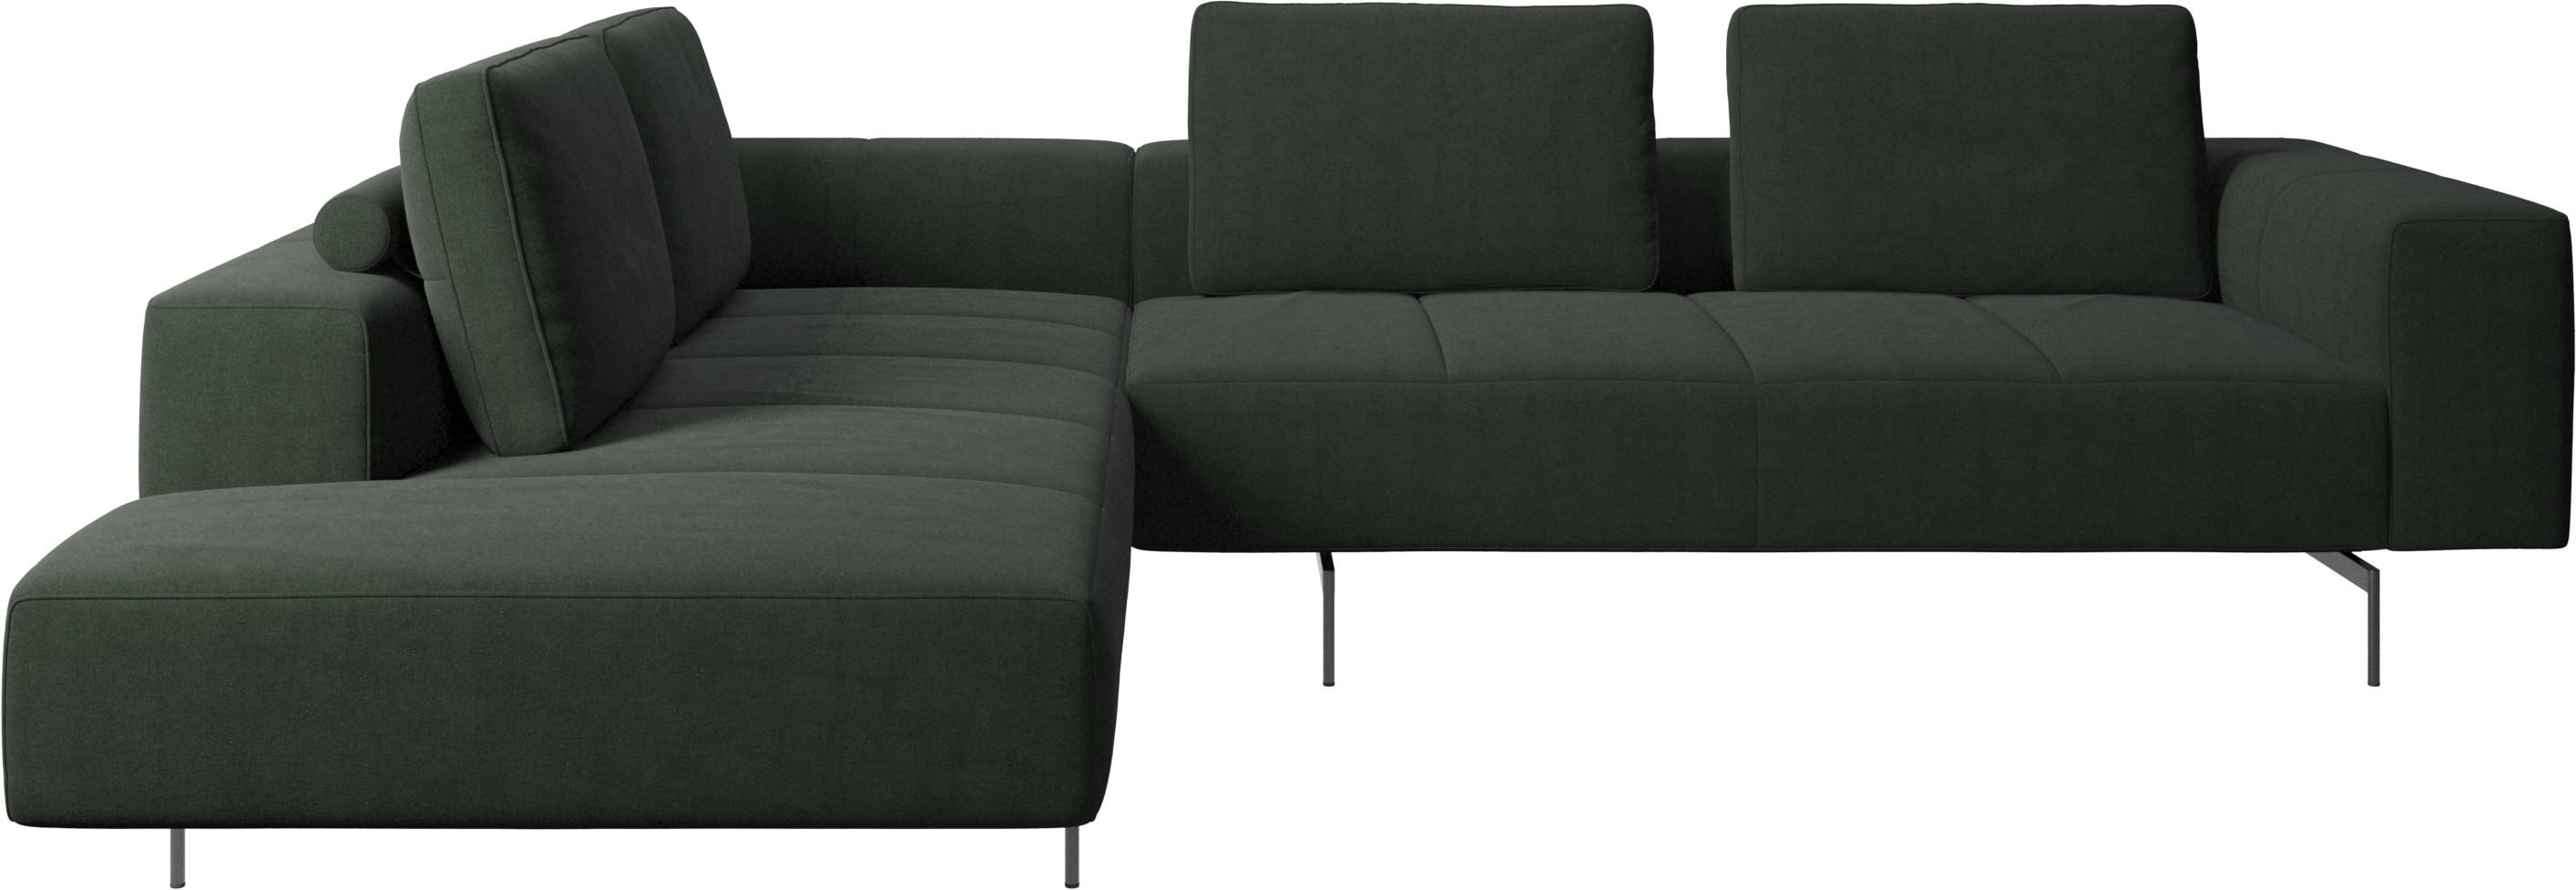 Amsterdam corner sofa with lounging unit